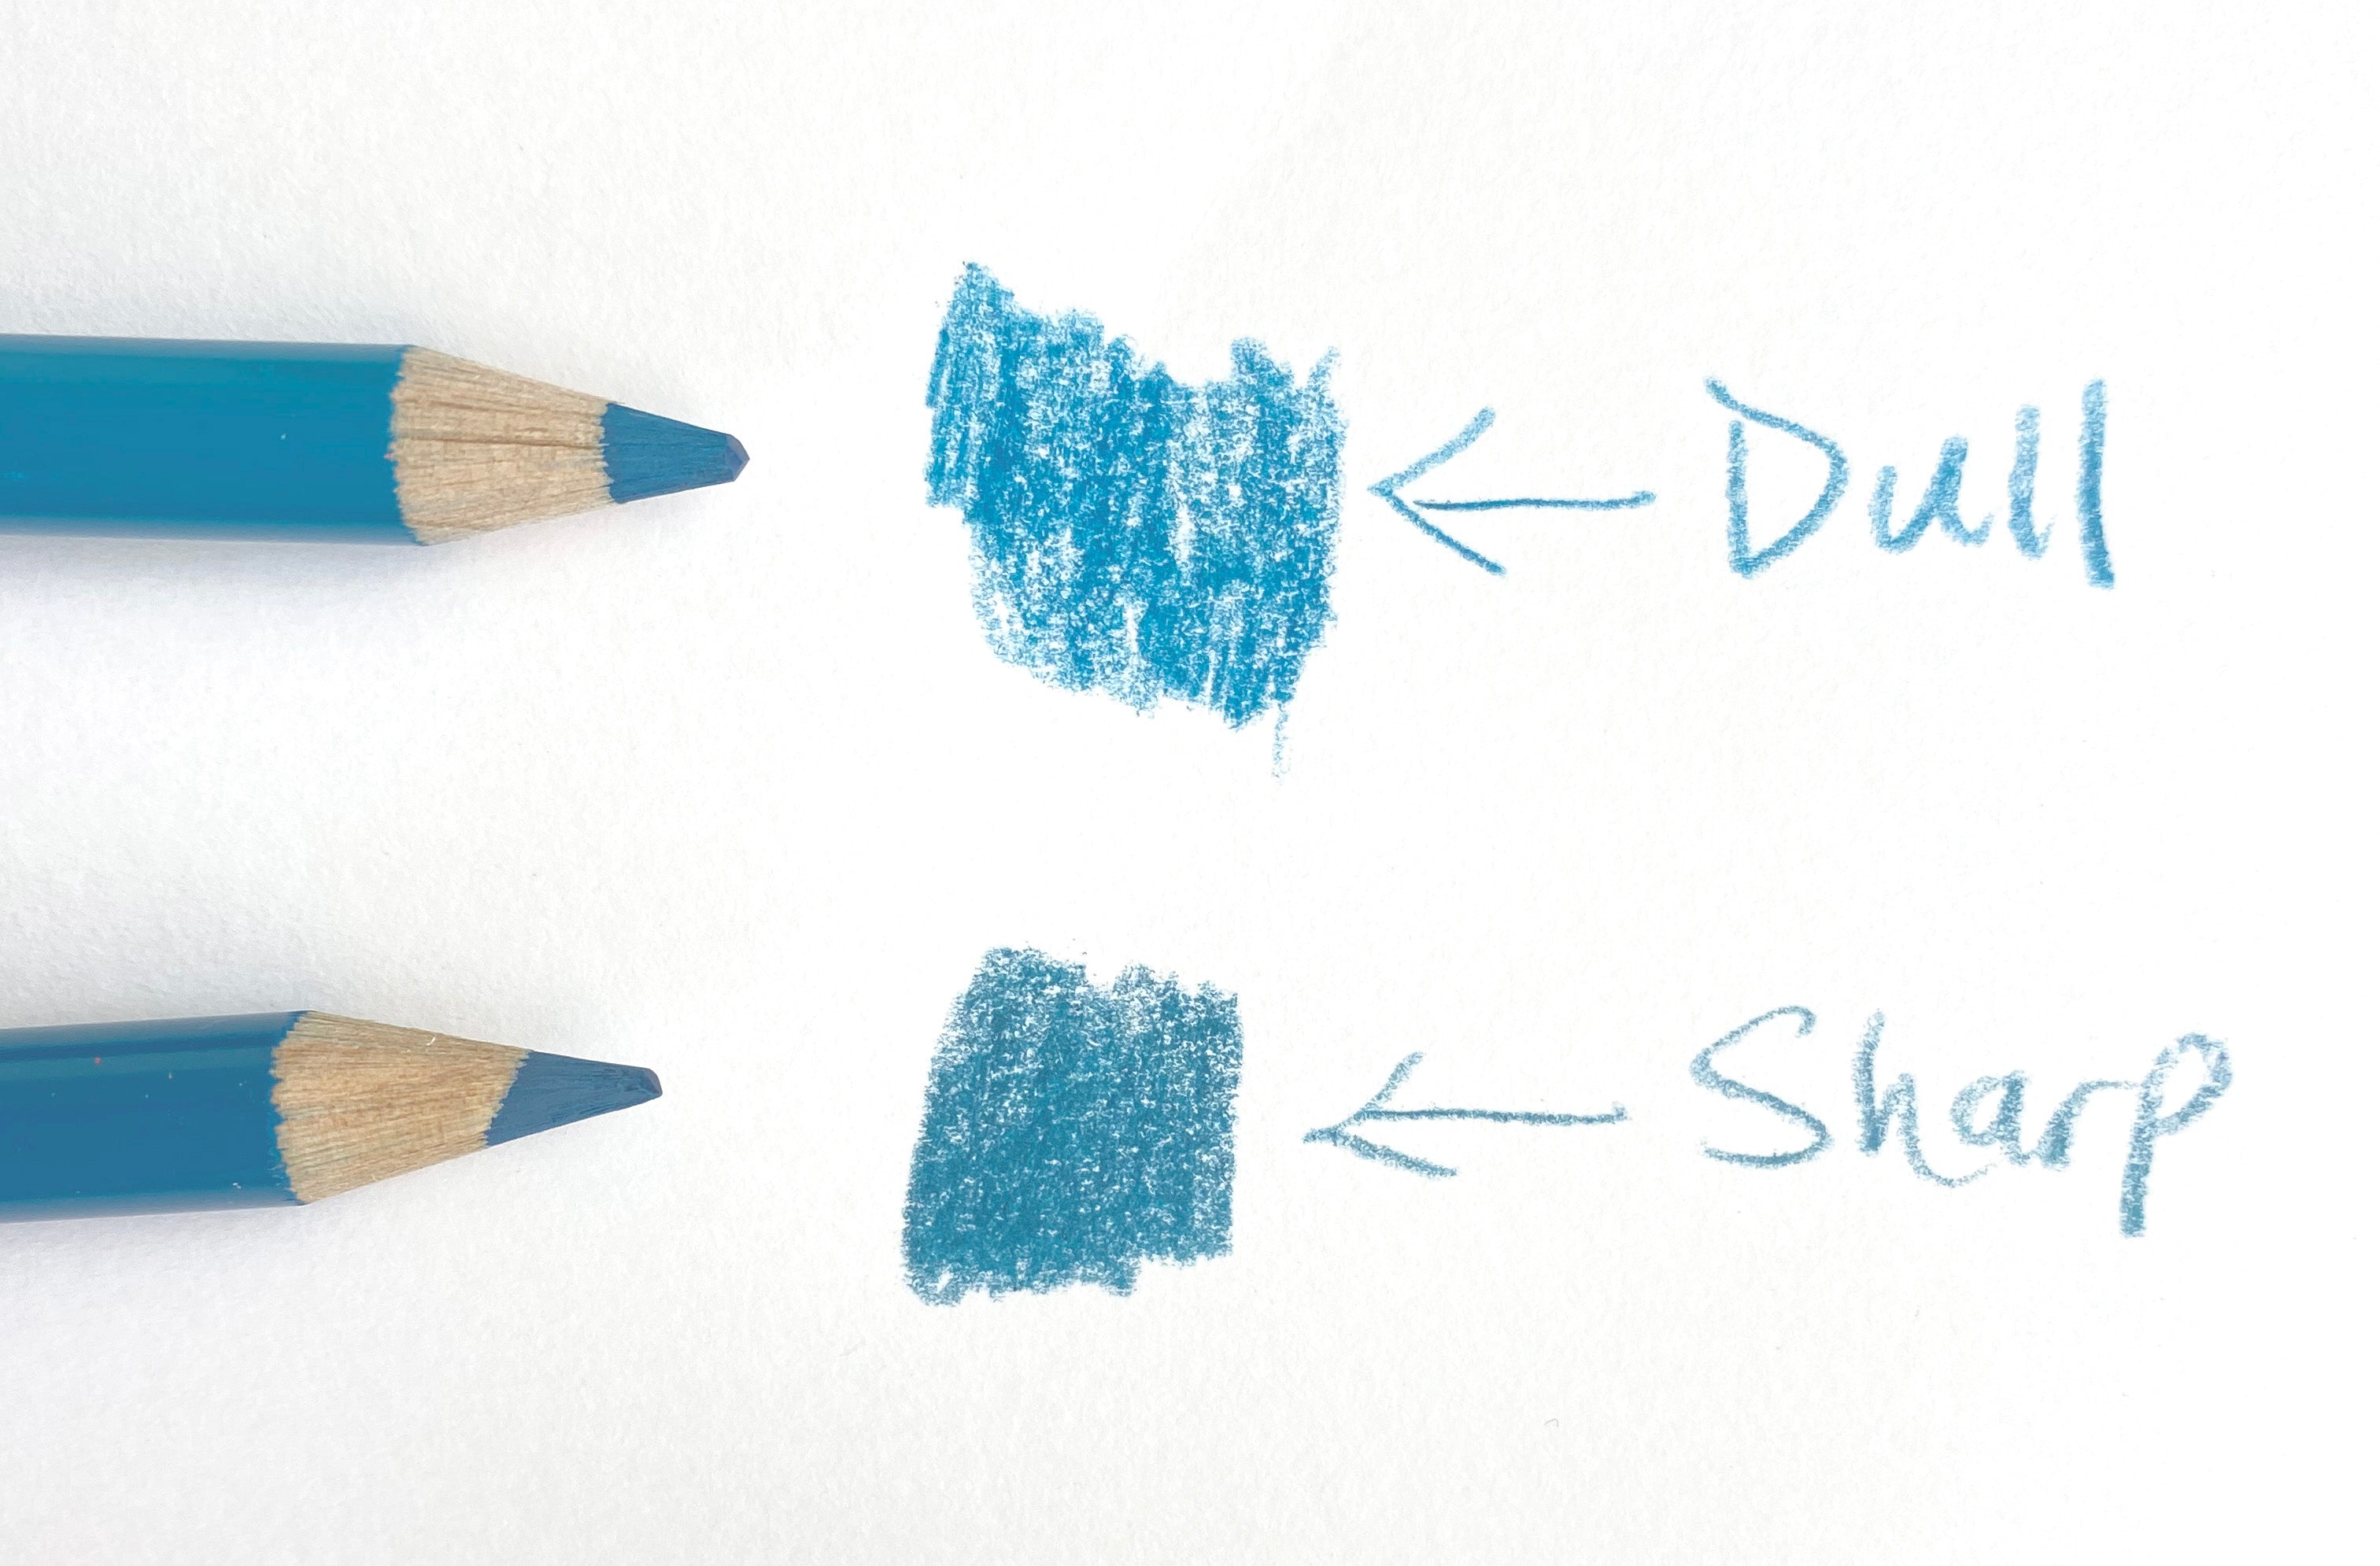 Dull vs. sharp colored pencils